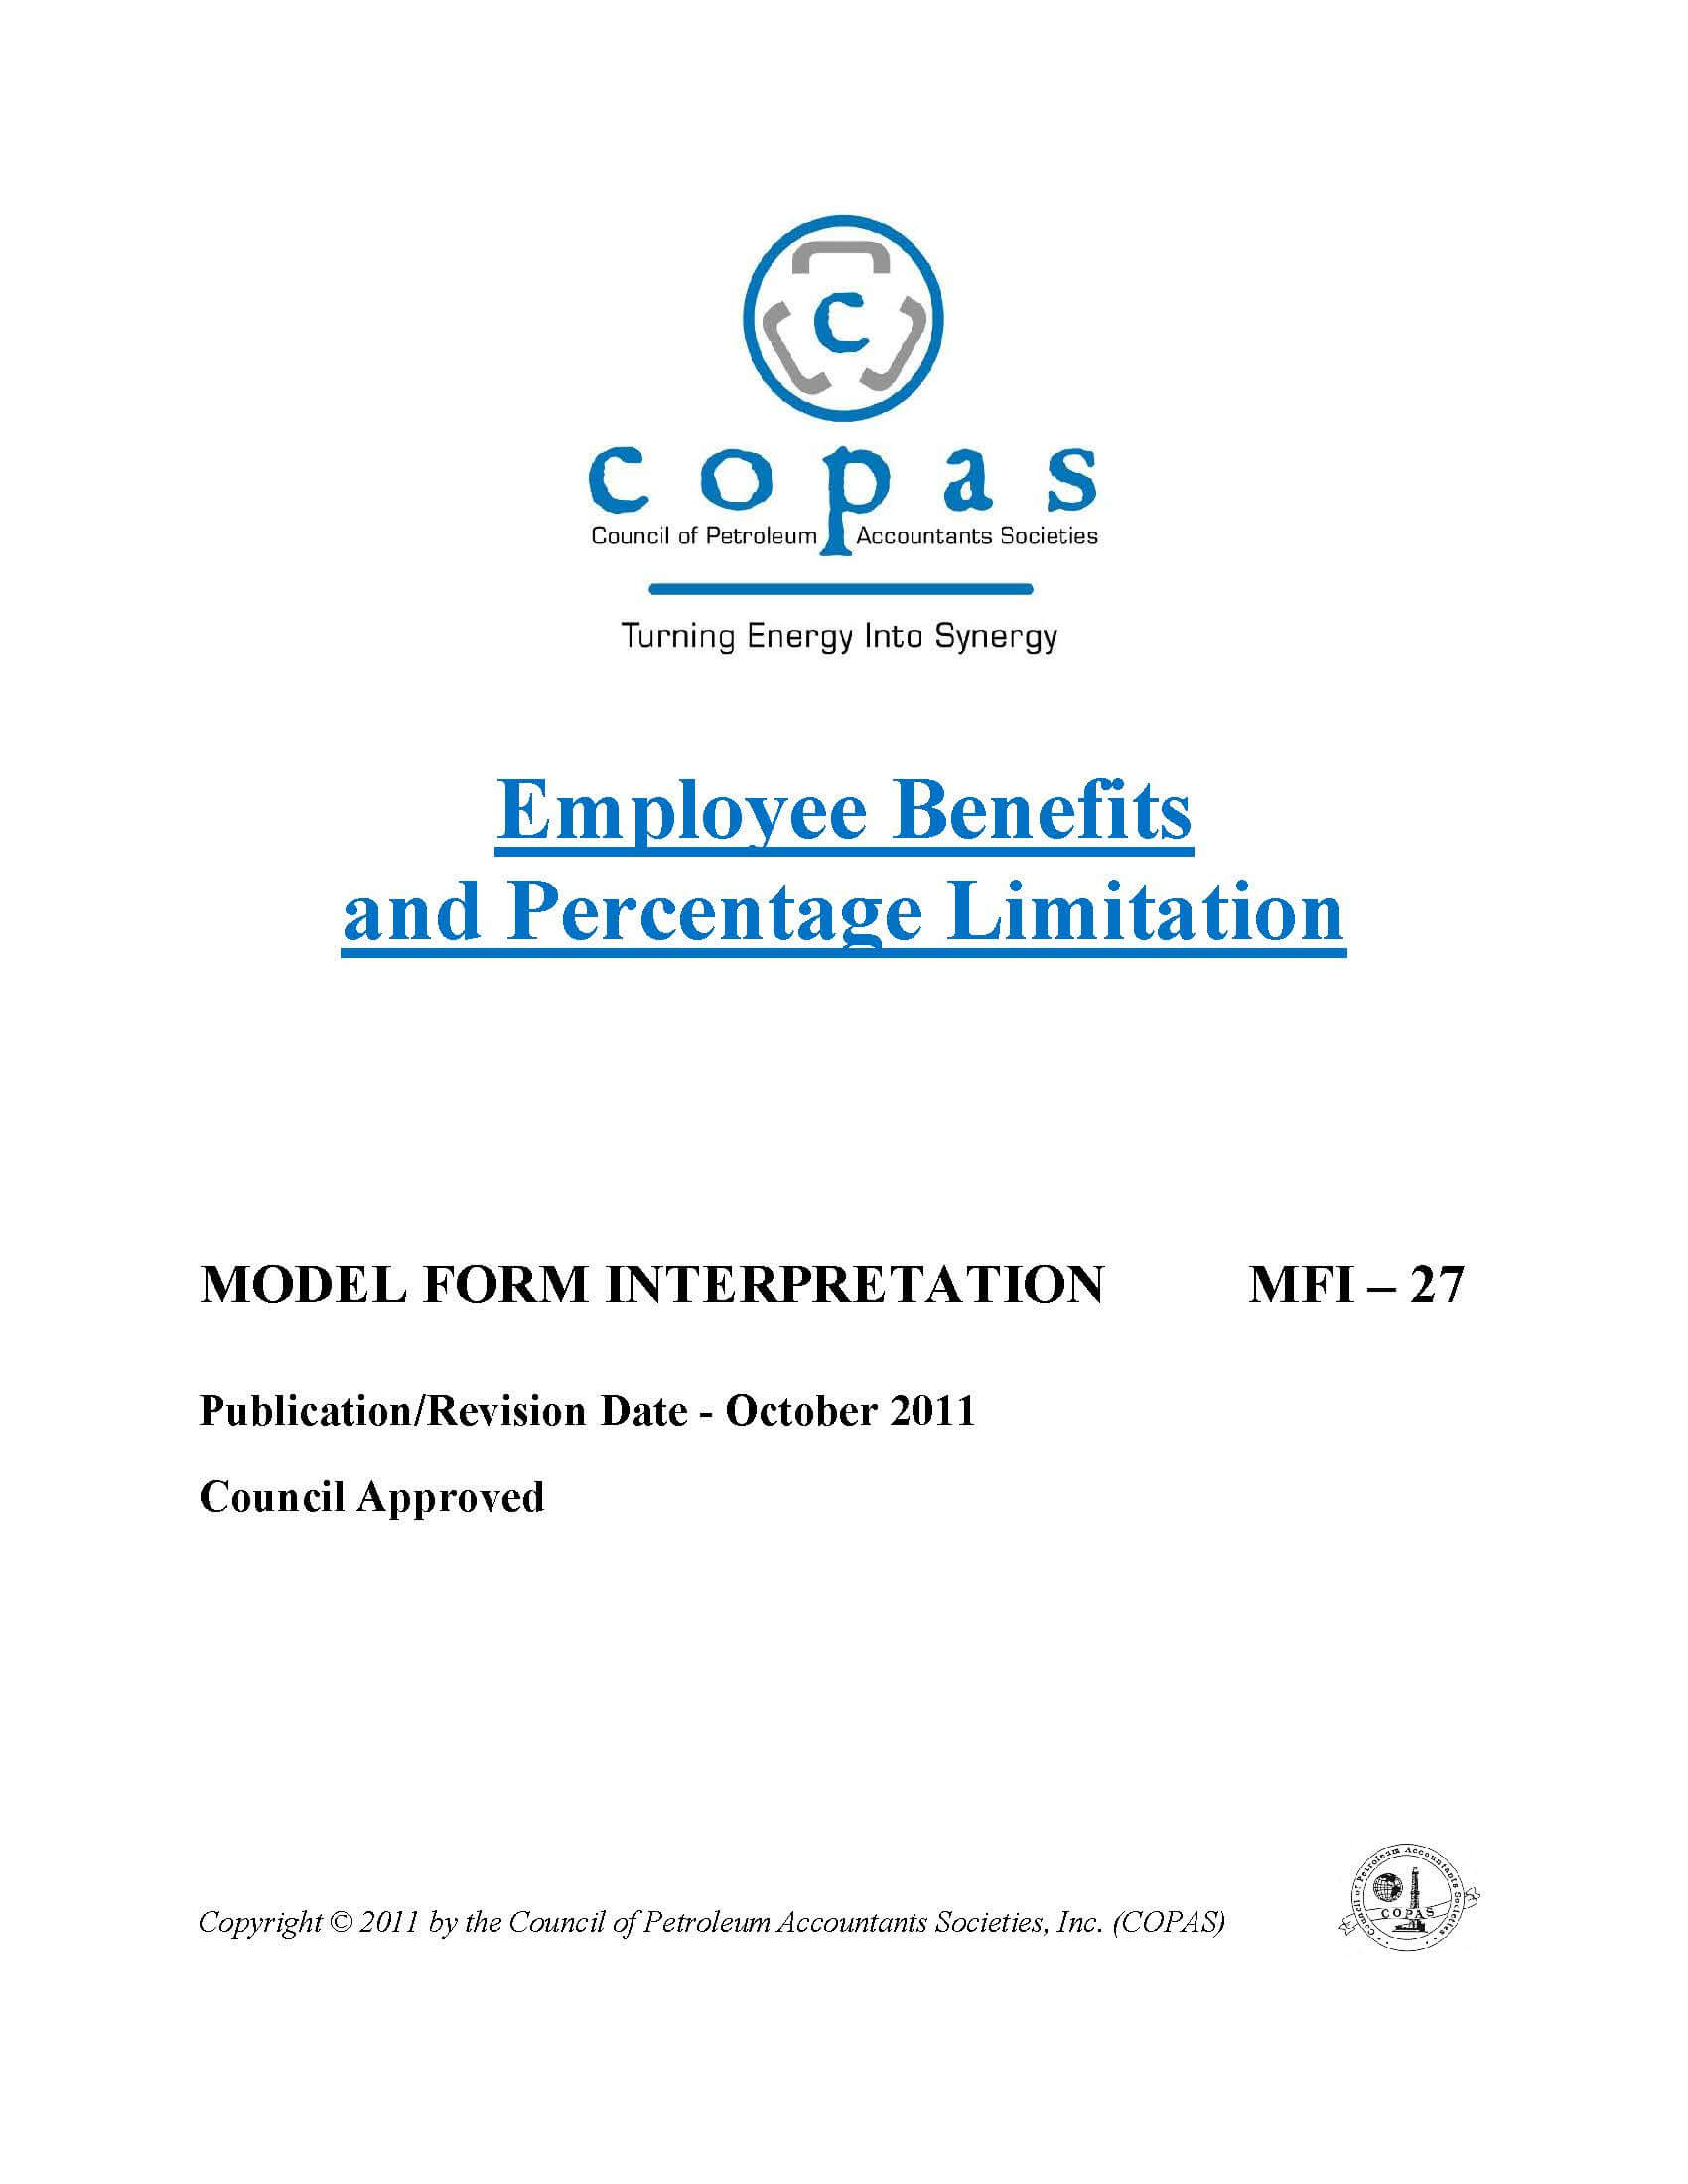 MFI-27 Employee Benefits and Percentage Limitation